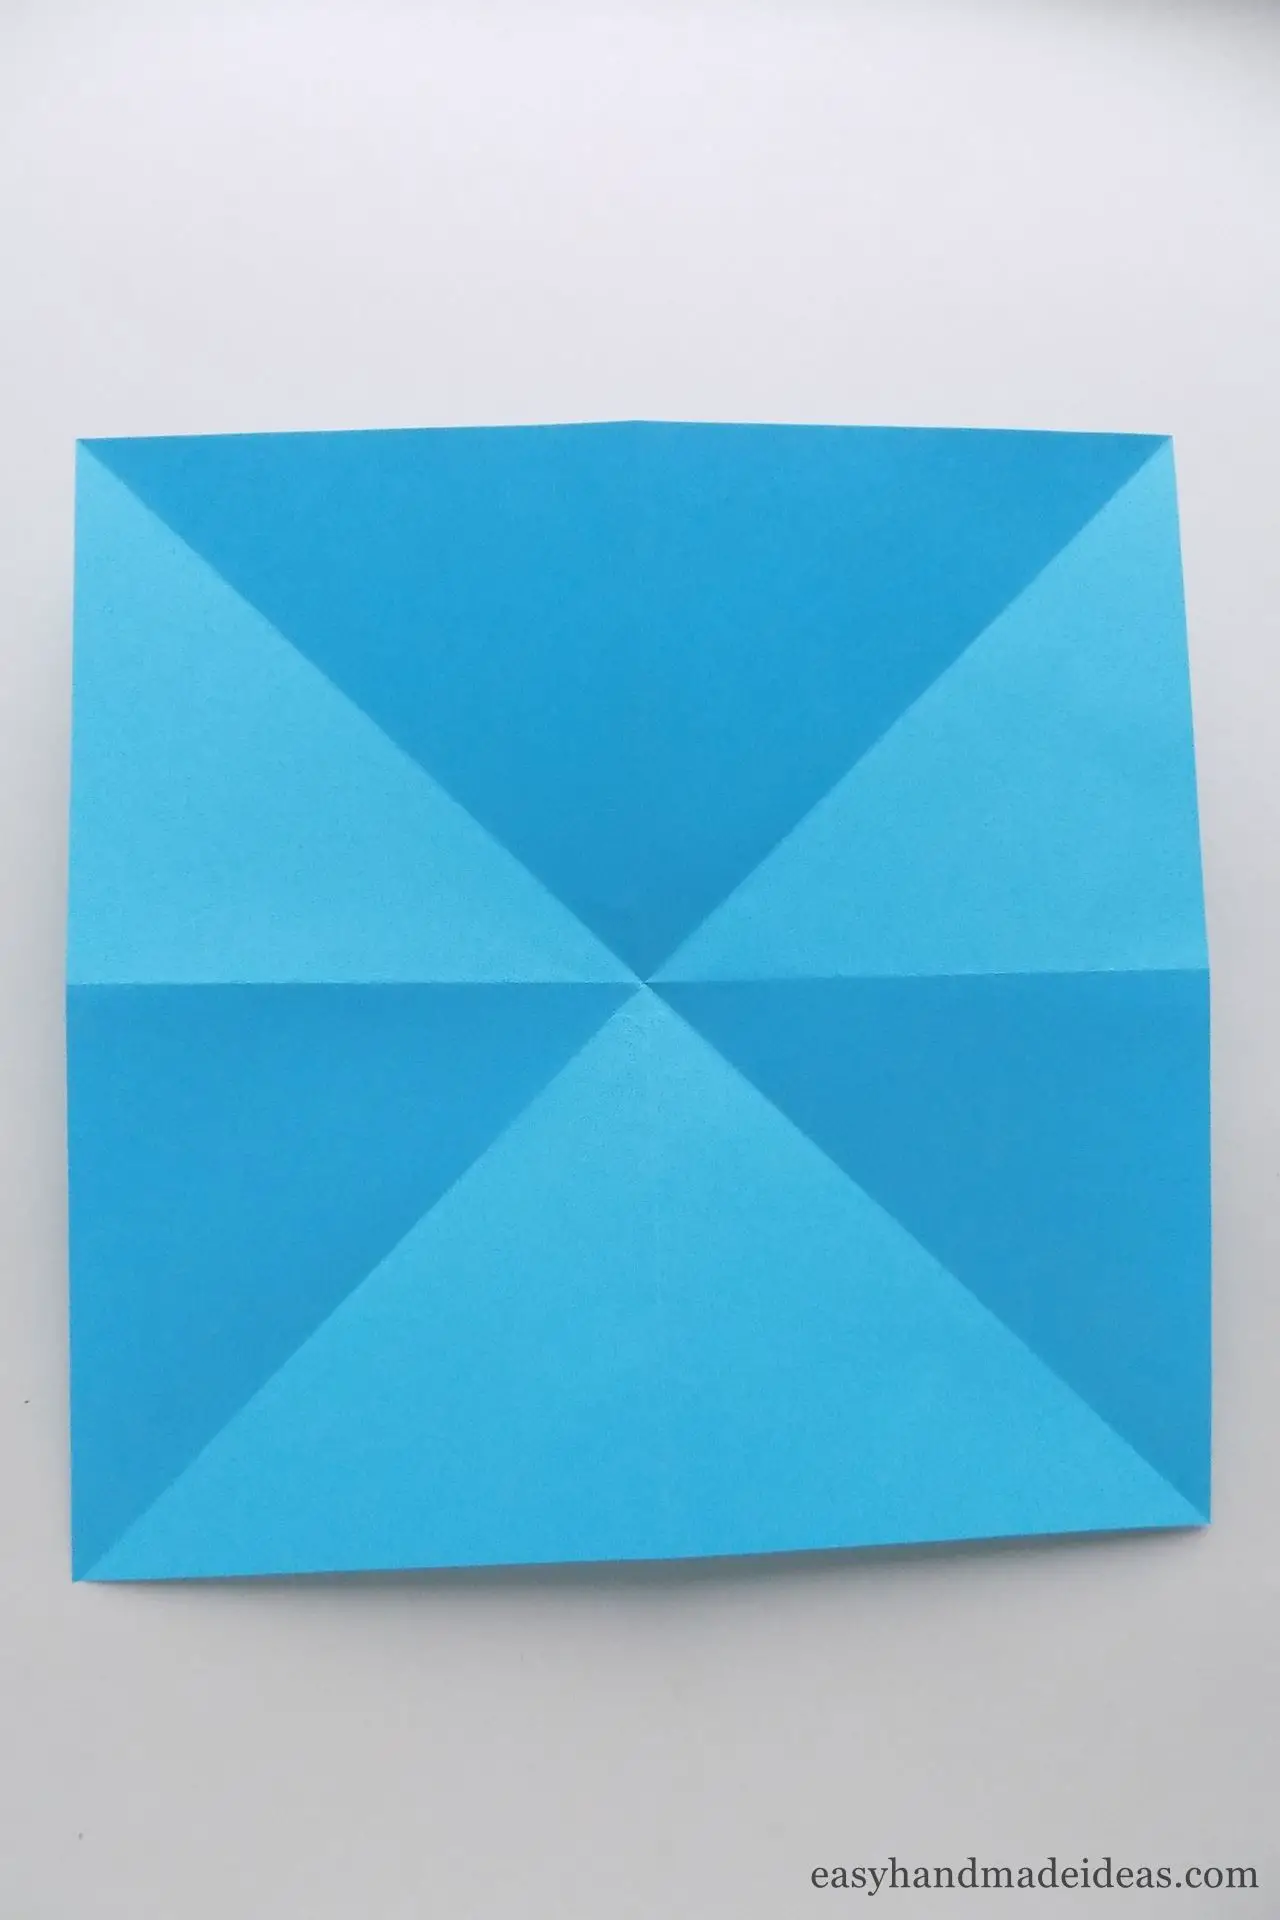 Make 2 diagonal folds and 2 cross folds